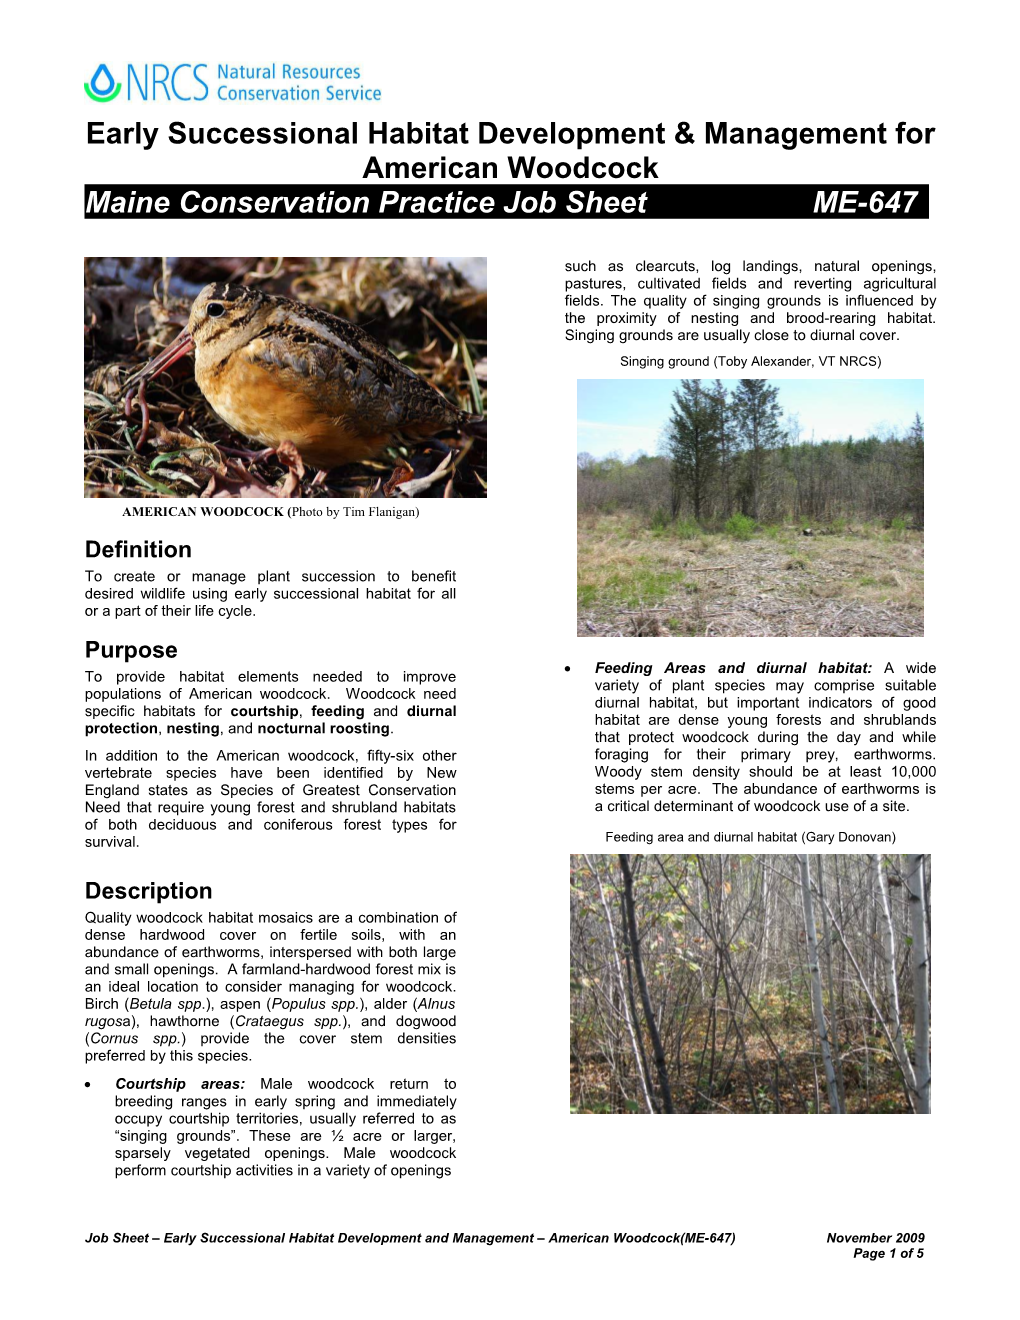 Early Successional Habitatdevelopment & Managementfor American Woodcock